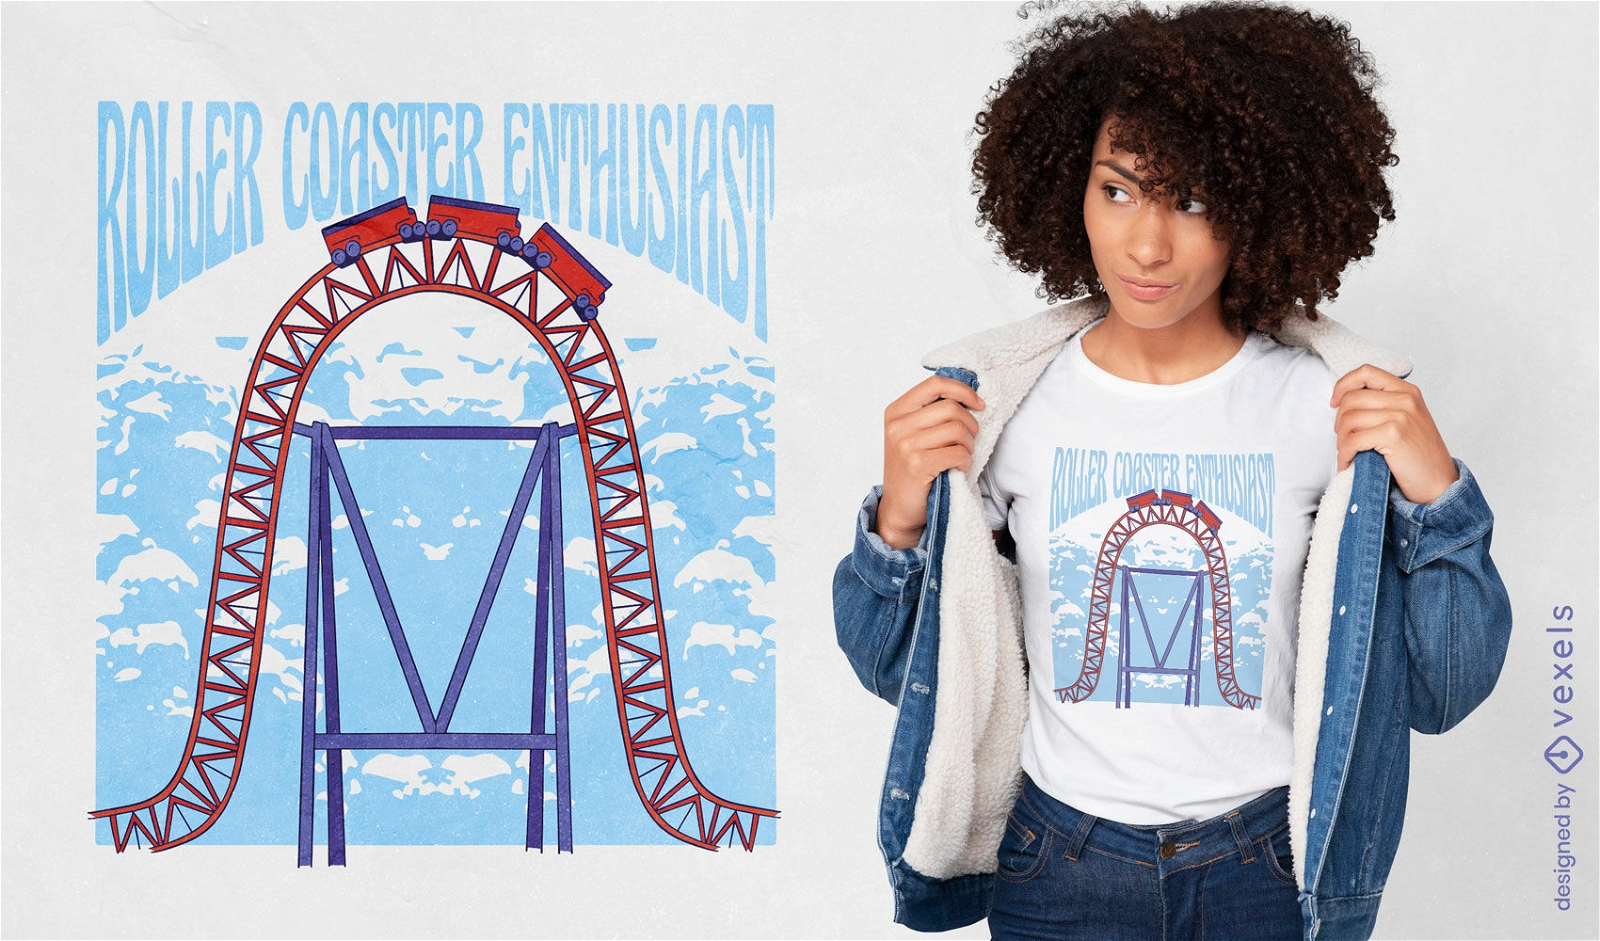 Roller coaster enthusiast t-shirt design